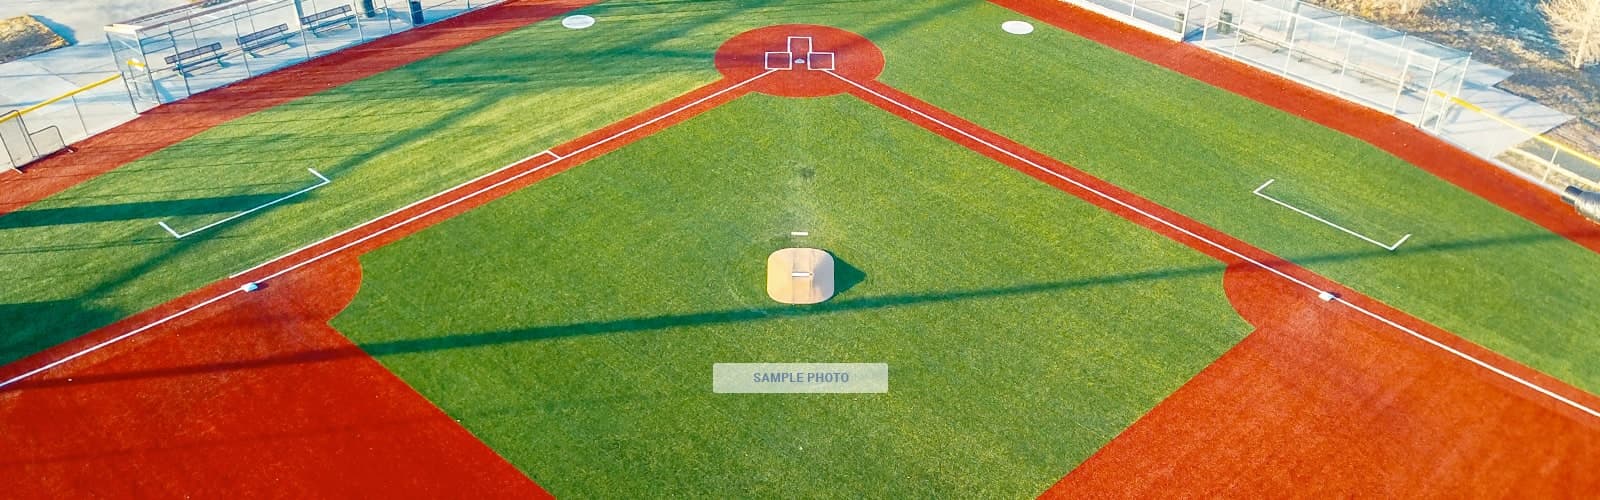 Los Arboles Literacy and Technology Academy Field - Baseball Practice in San Jose California